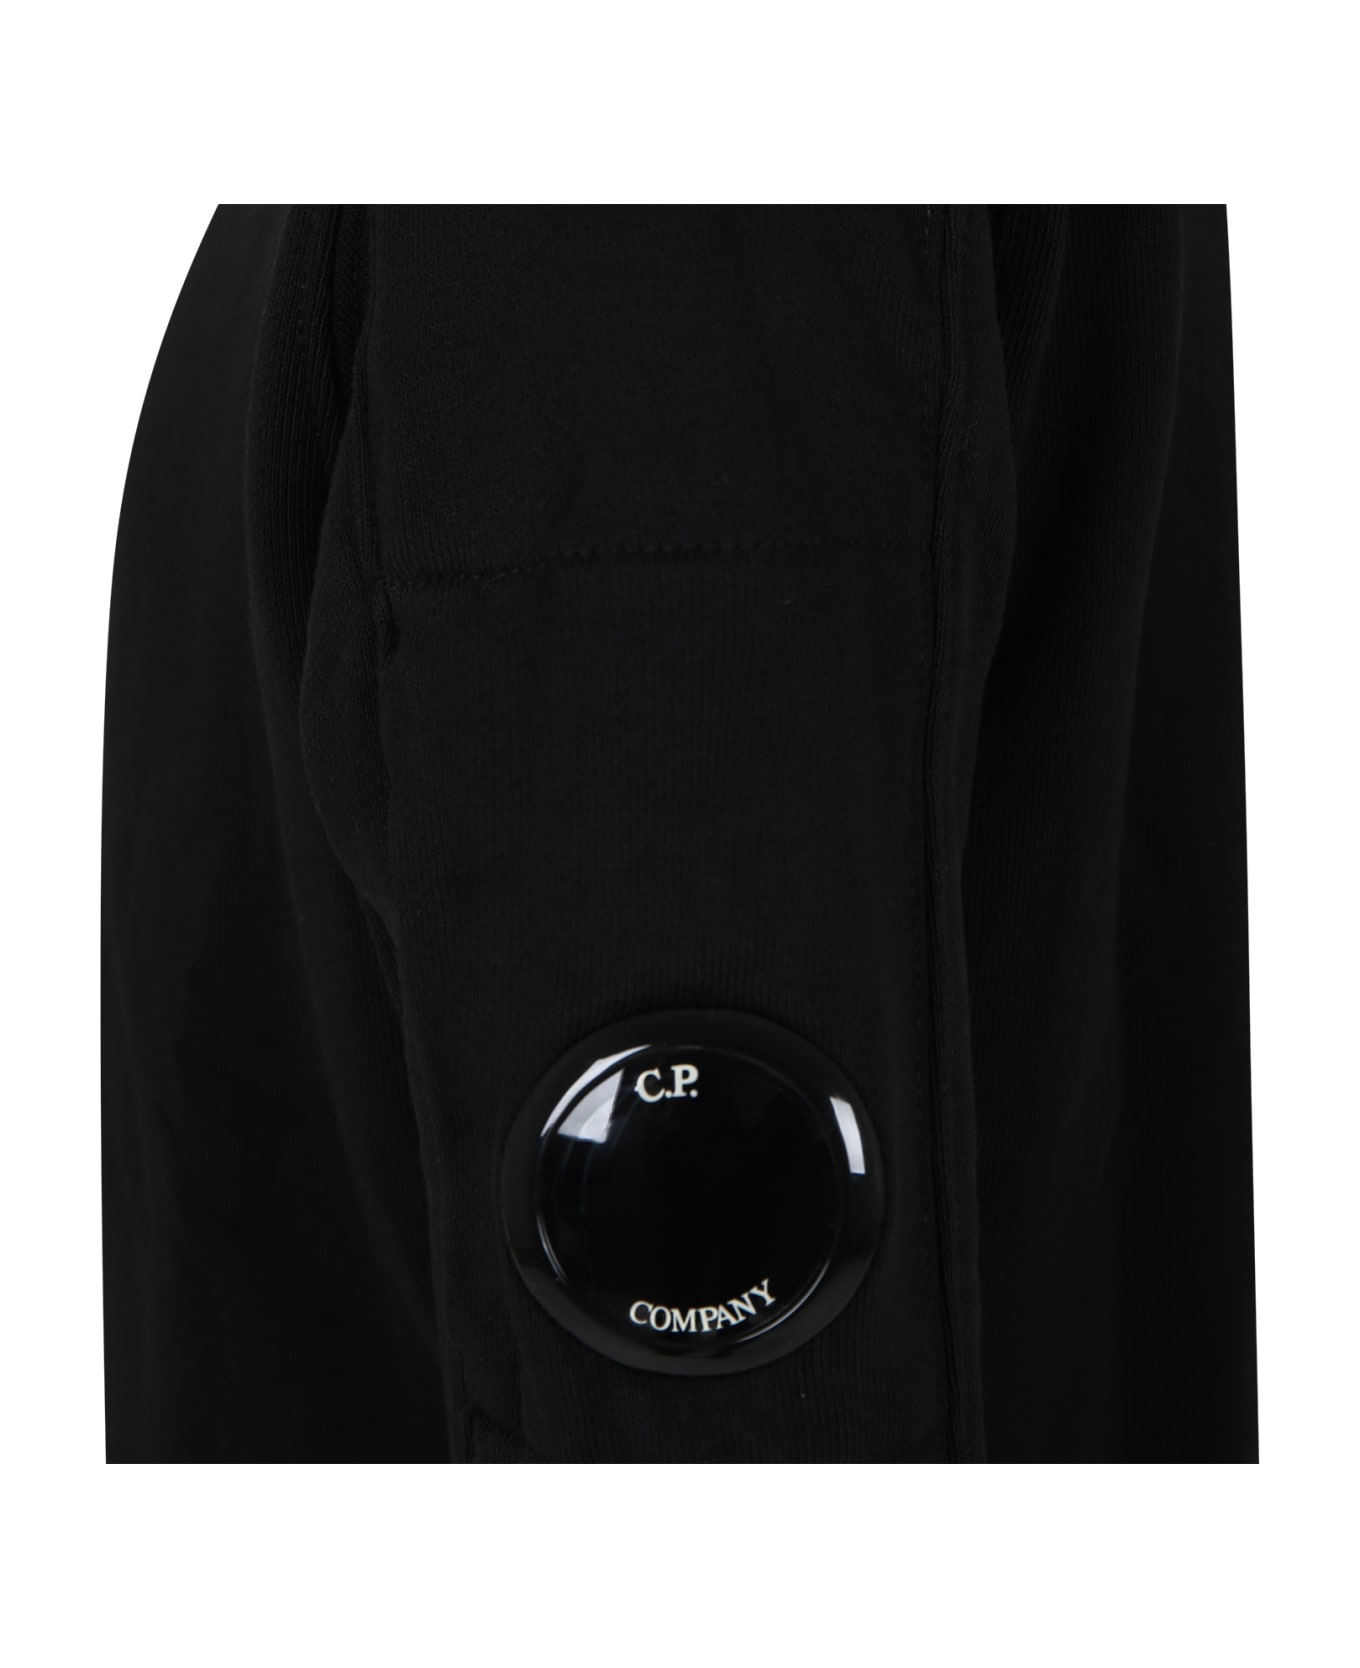 C.P. Company Undersixteen Black Sweatshirt For Boy With C.p. Company Lens - Black